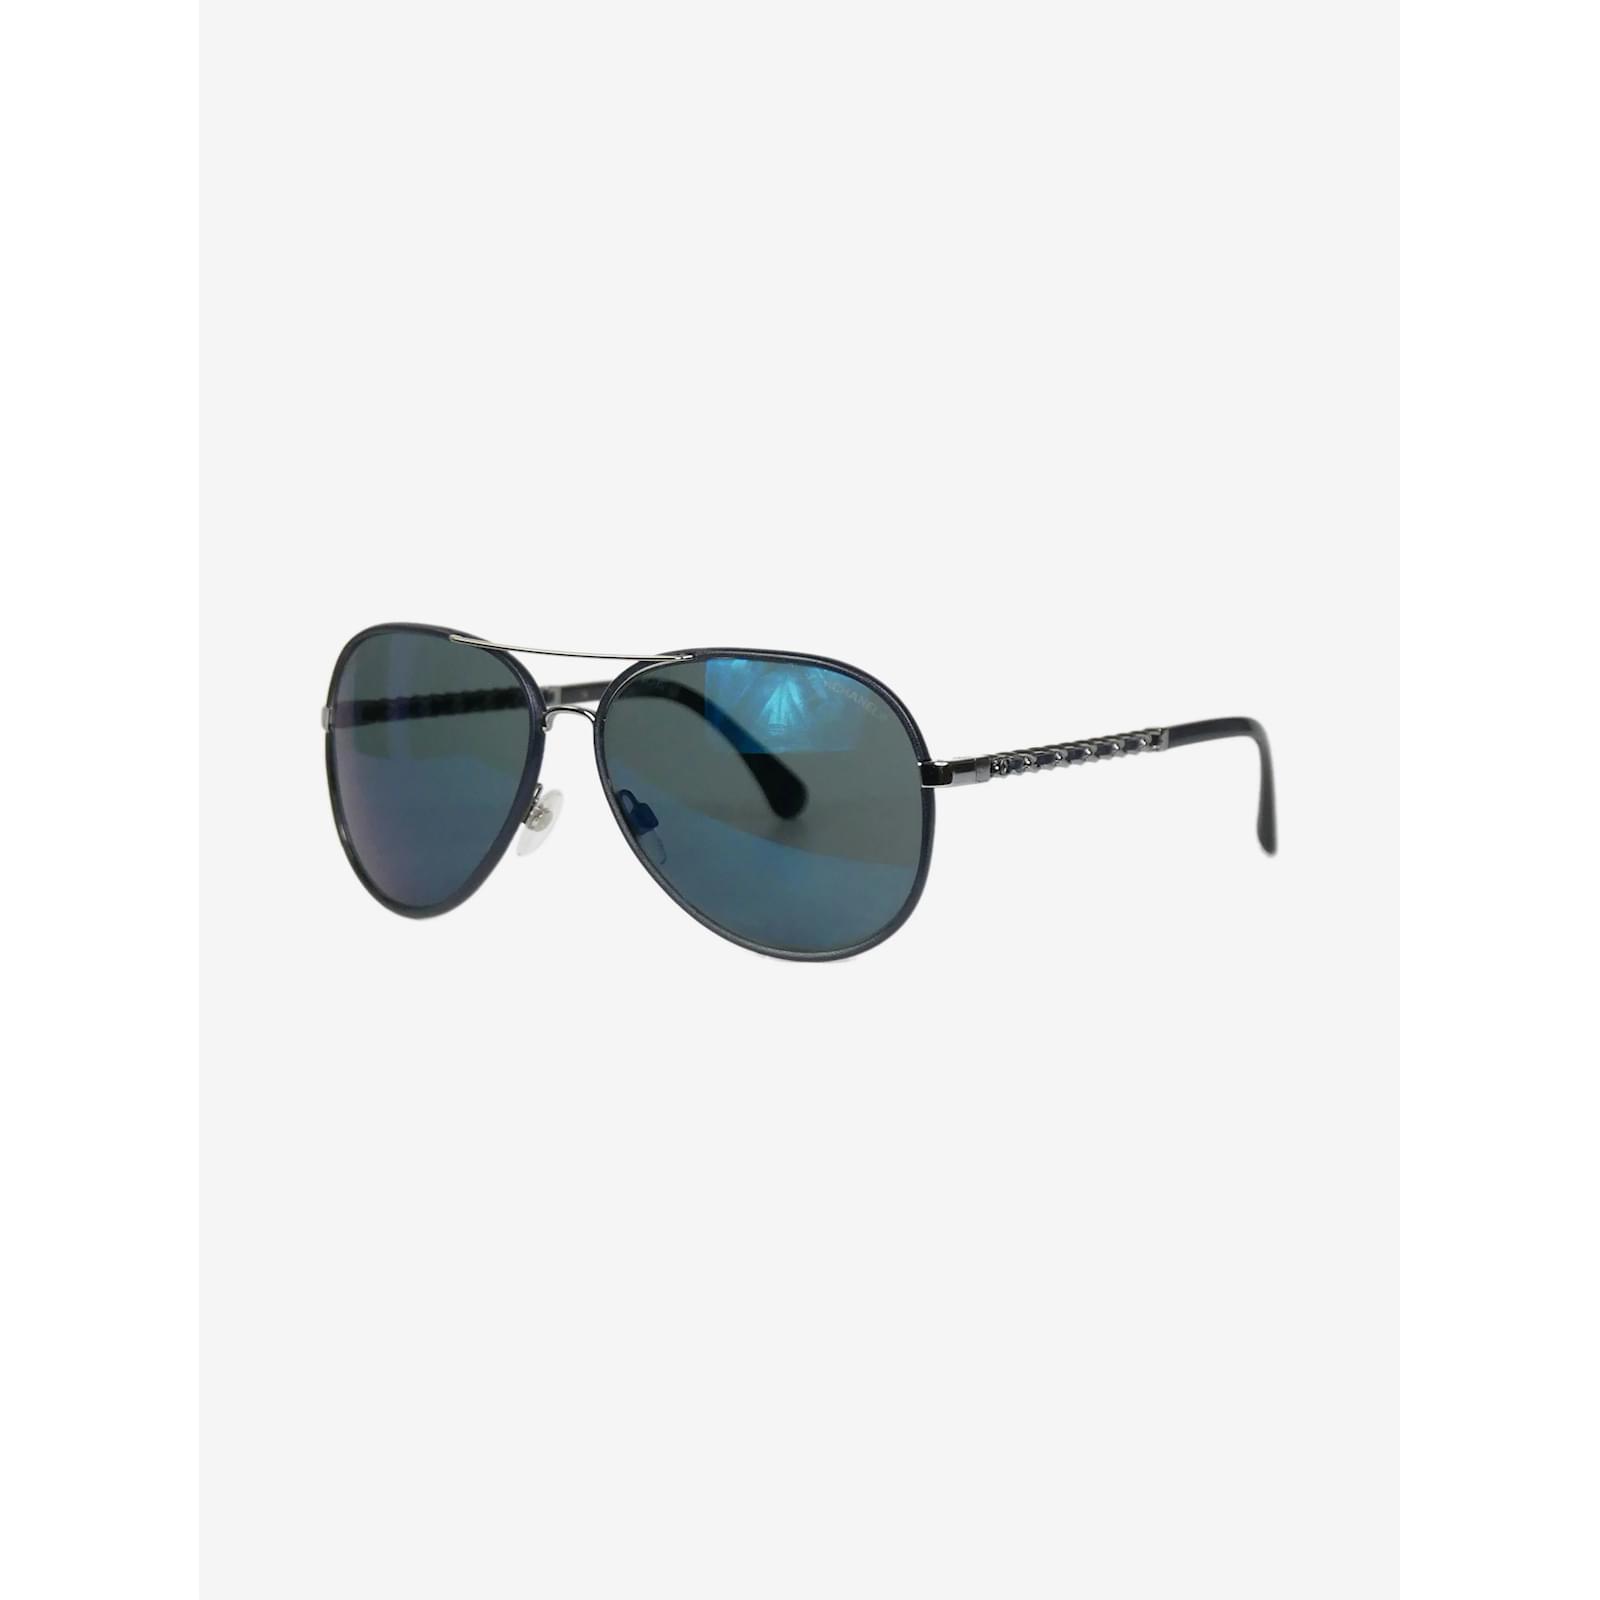 Chanel Logo Pilot Sunglasses in Blue